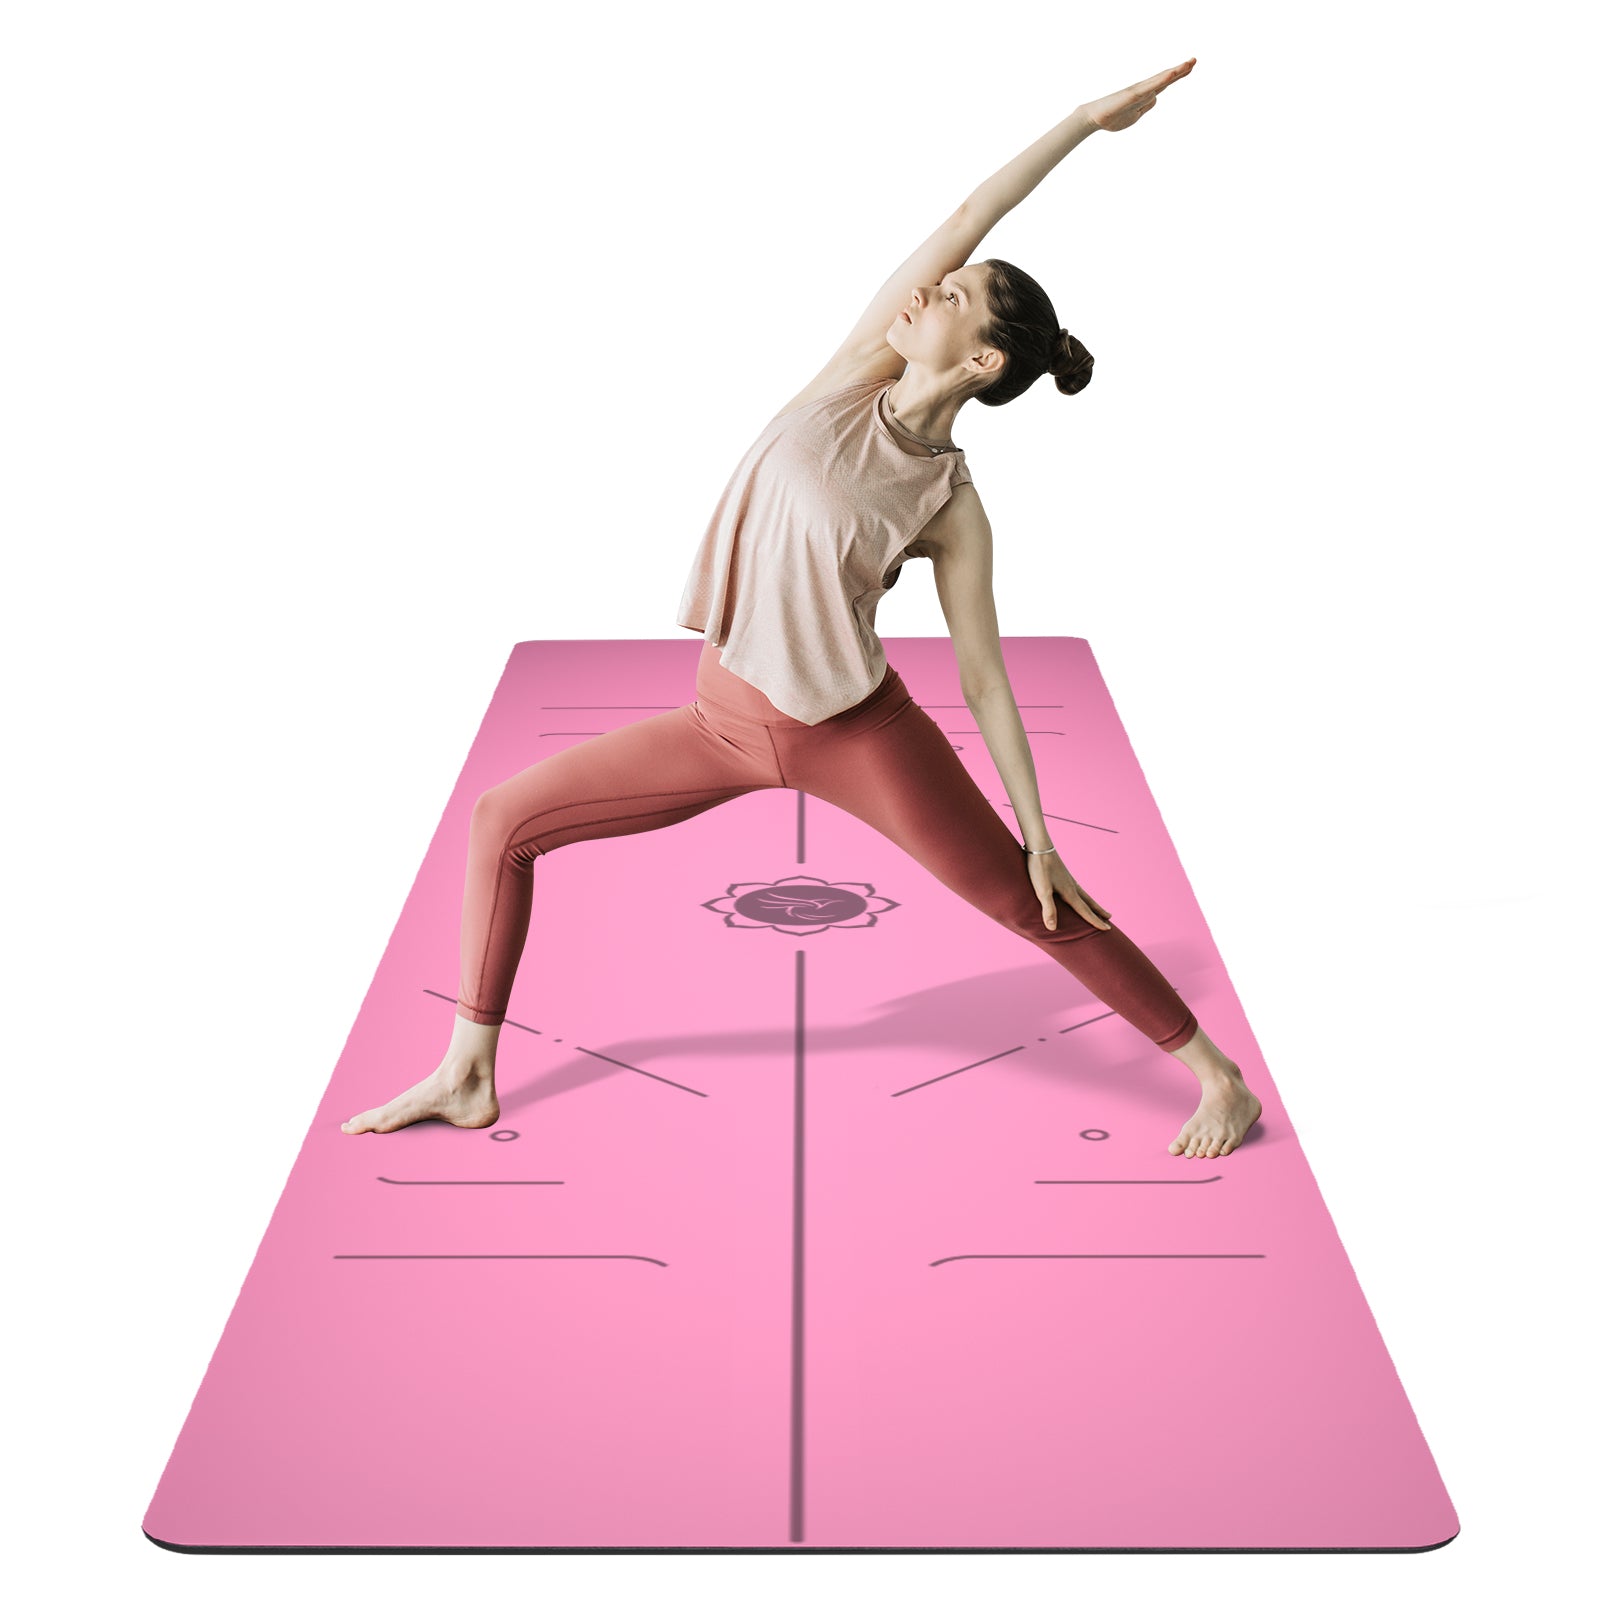 Lolë - 5mm Reversible Eco Friendly Yoga Mat for Fitness Pilates